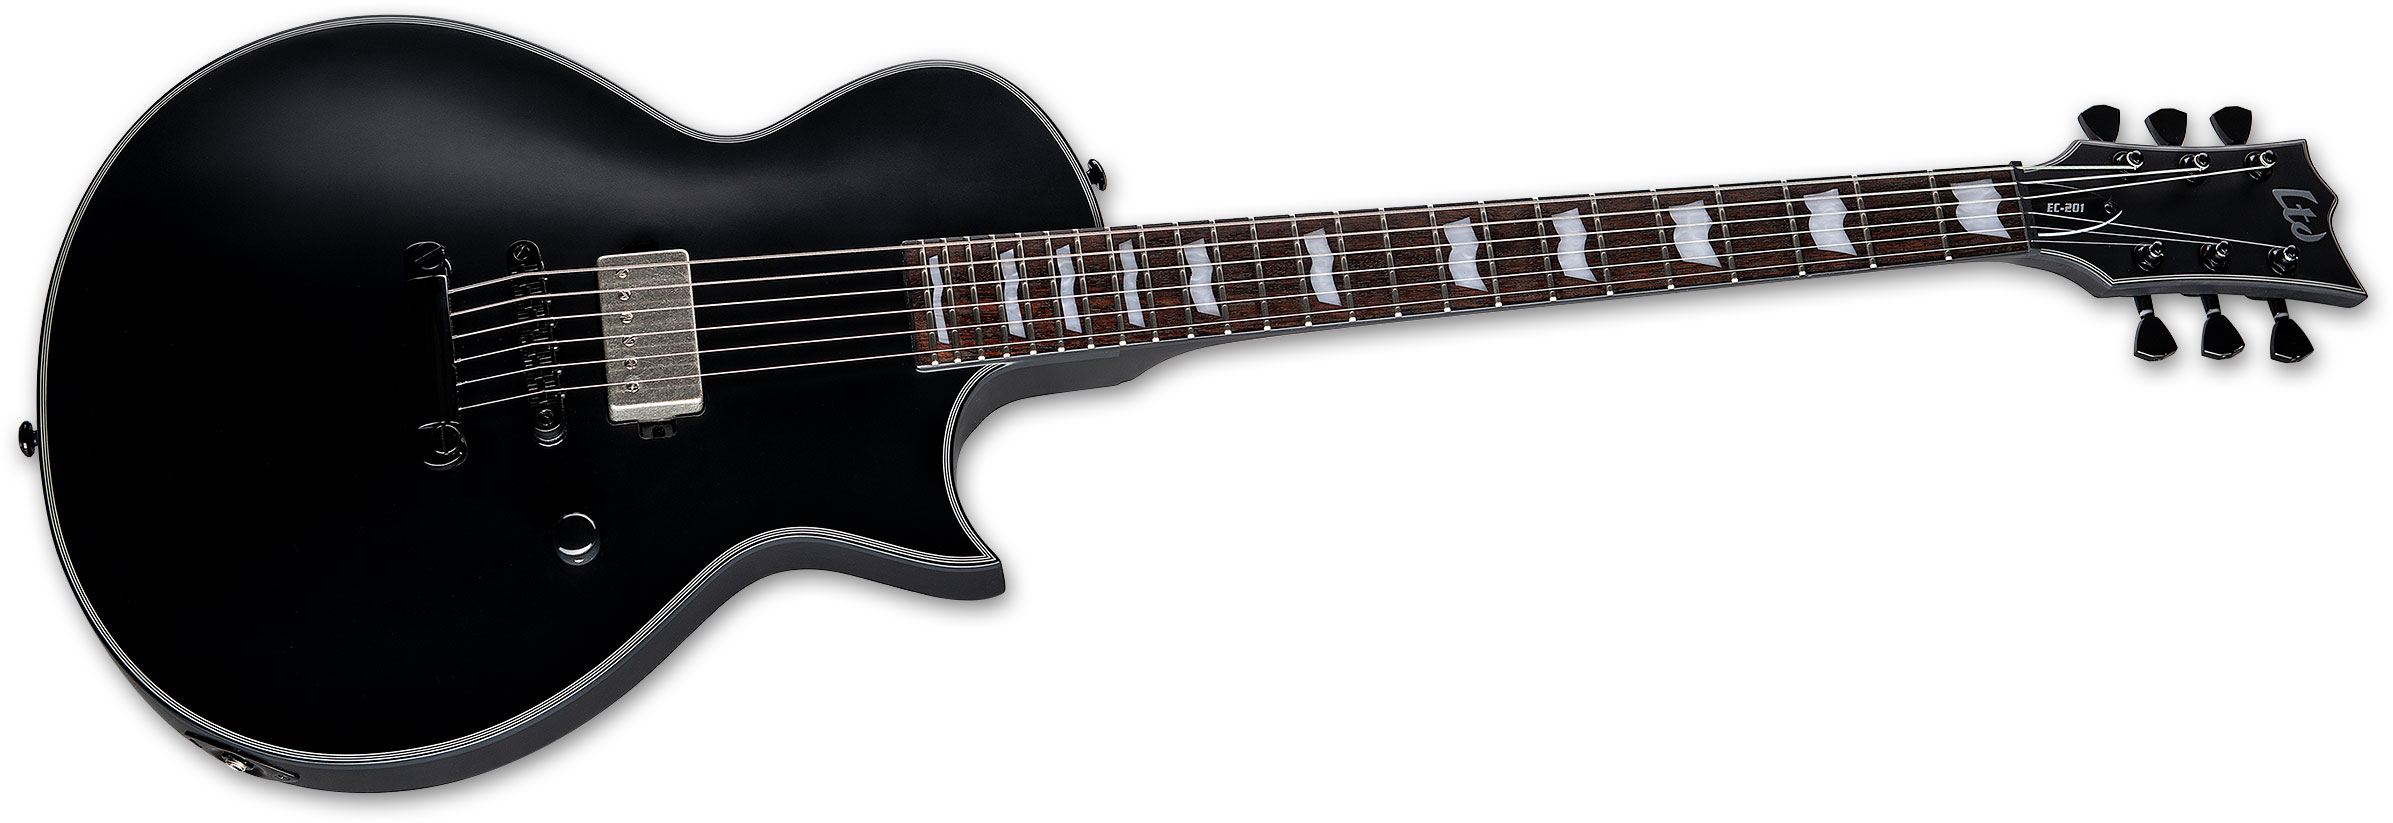 Ltd Ec-201 1h Ht Jat - Black Satin - Enkel gesneden elektrische gitaar - Variation 1